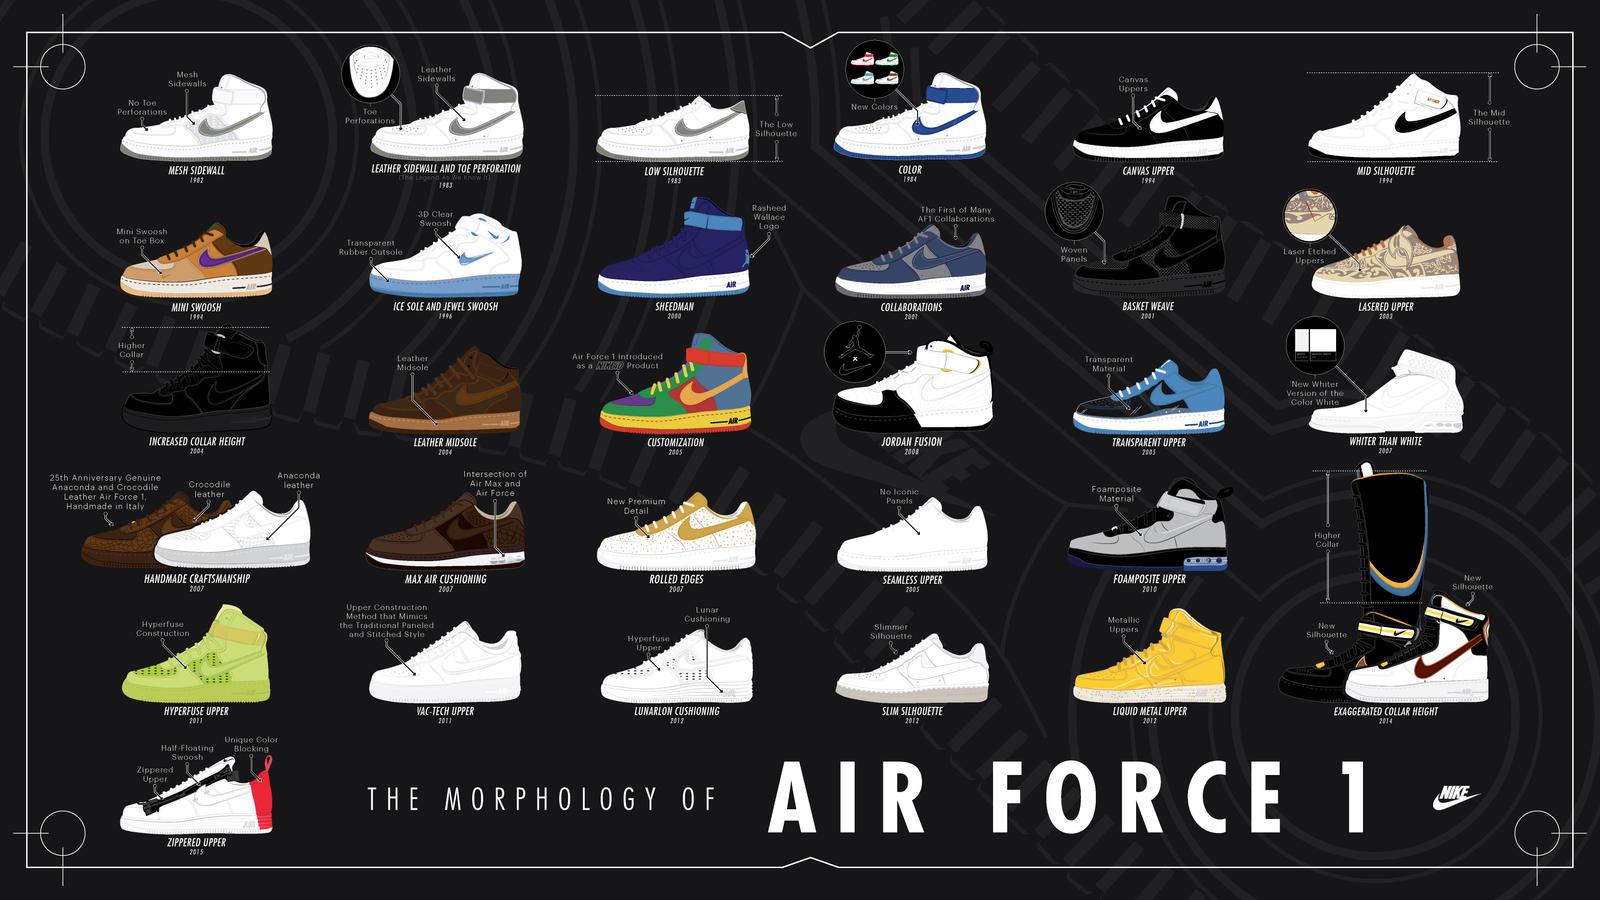 Morphology of Nike Air Force One photo- Nike